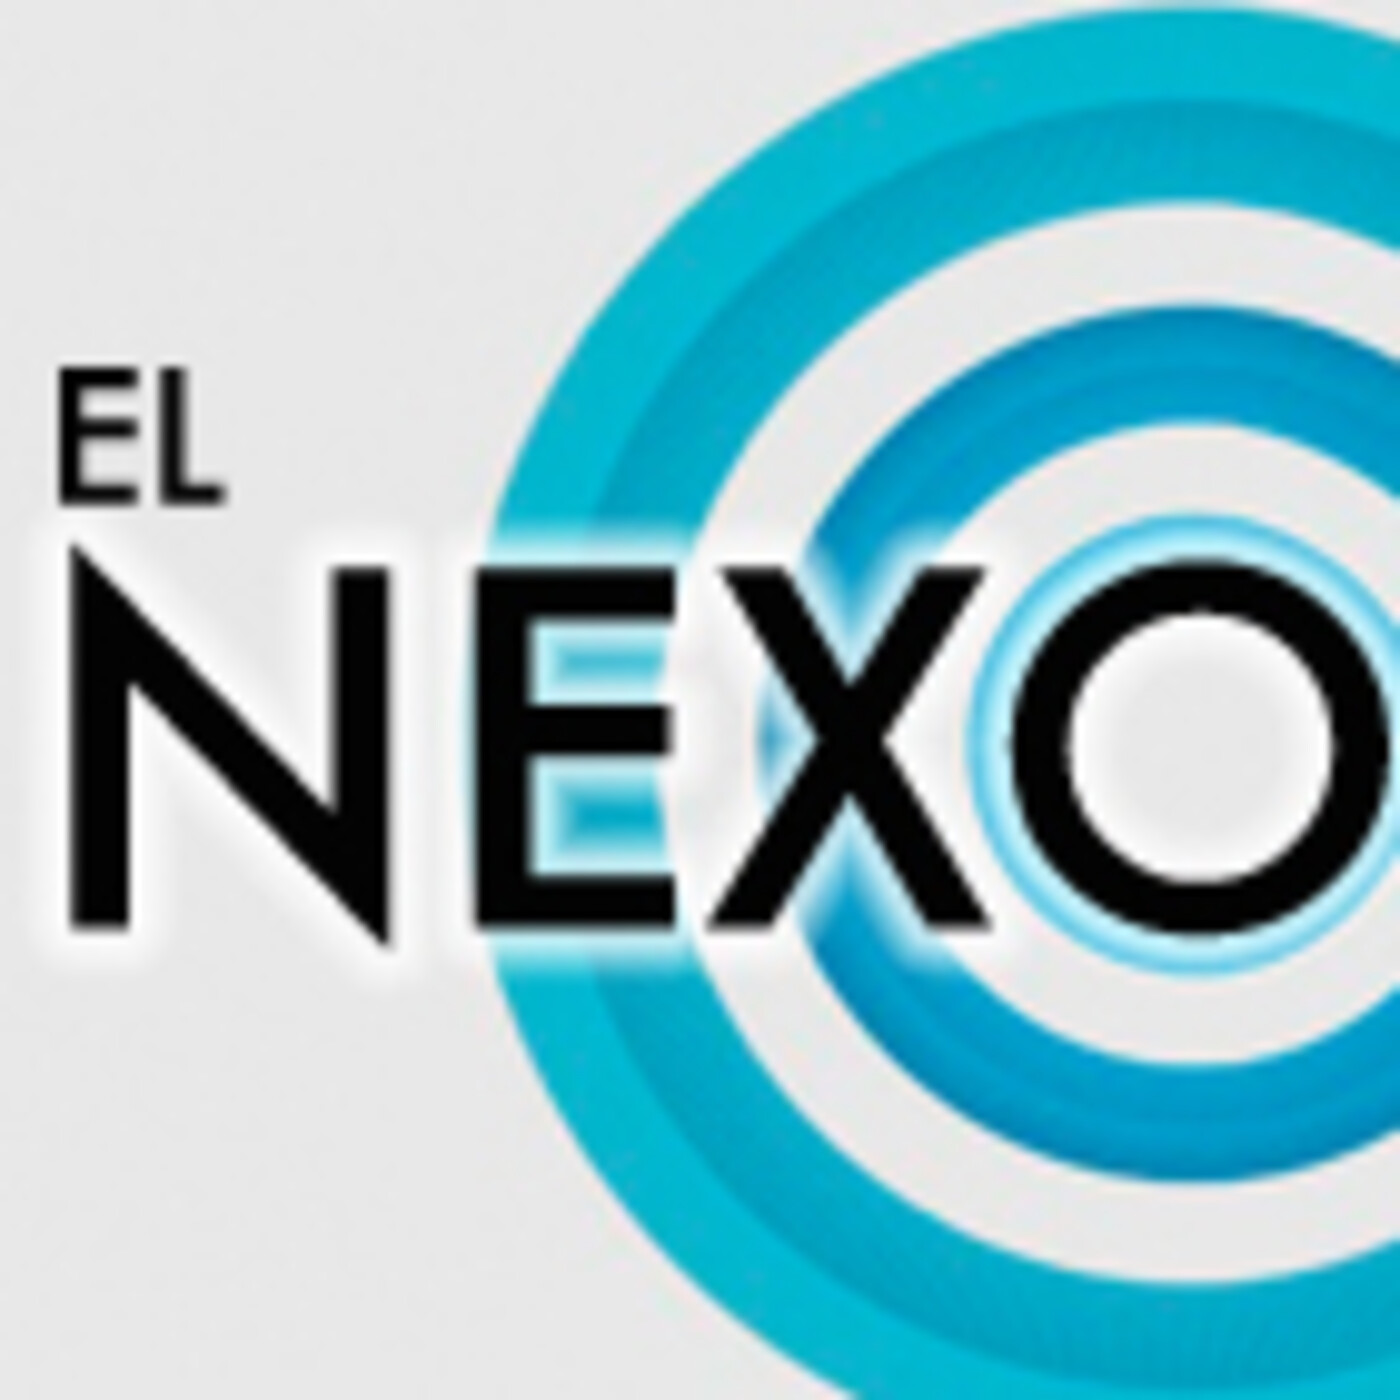 EL NEXO 3x30 - E3 2021 - XBOX, UBISOFT y SQUARE-ENIX